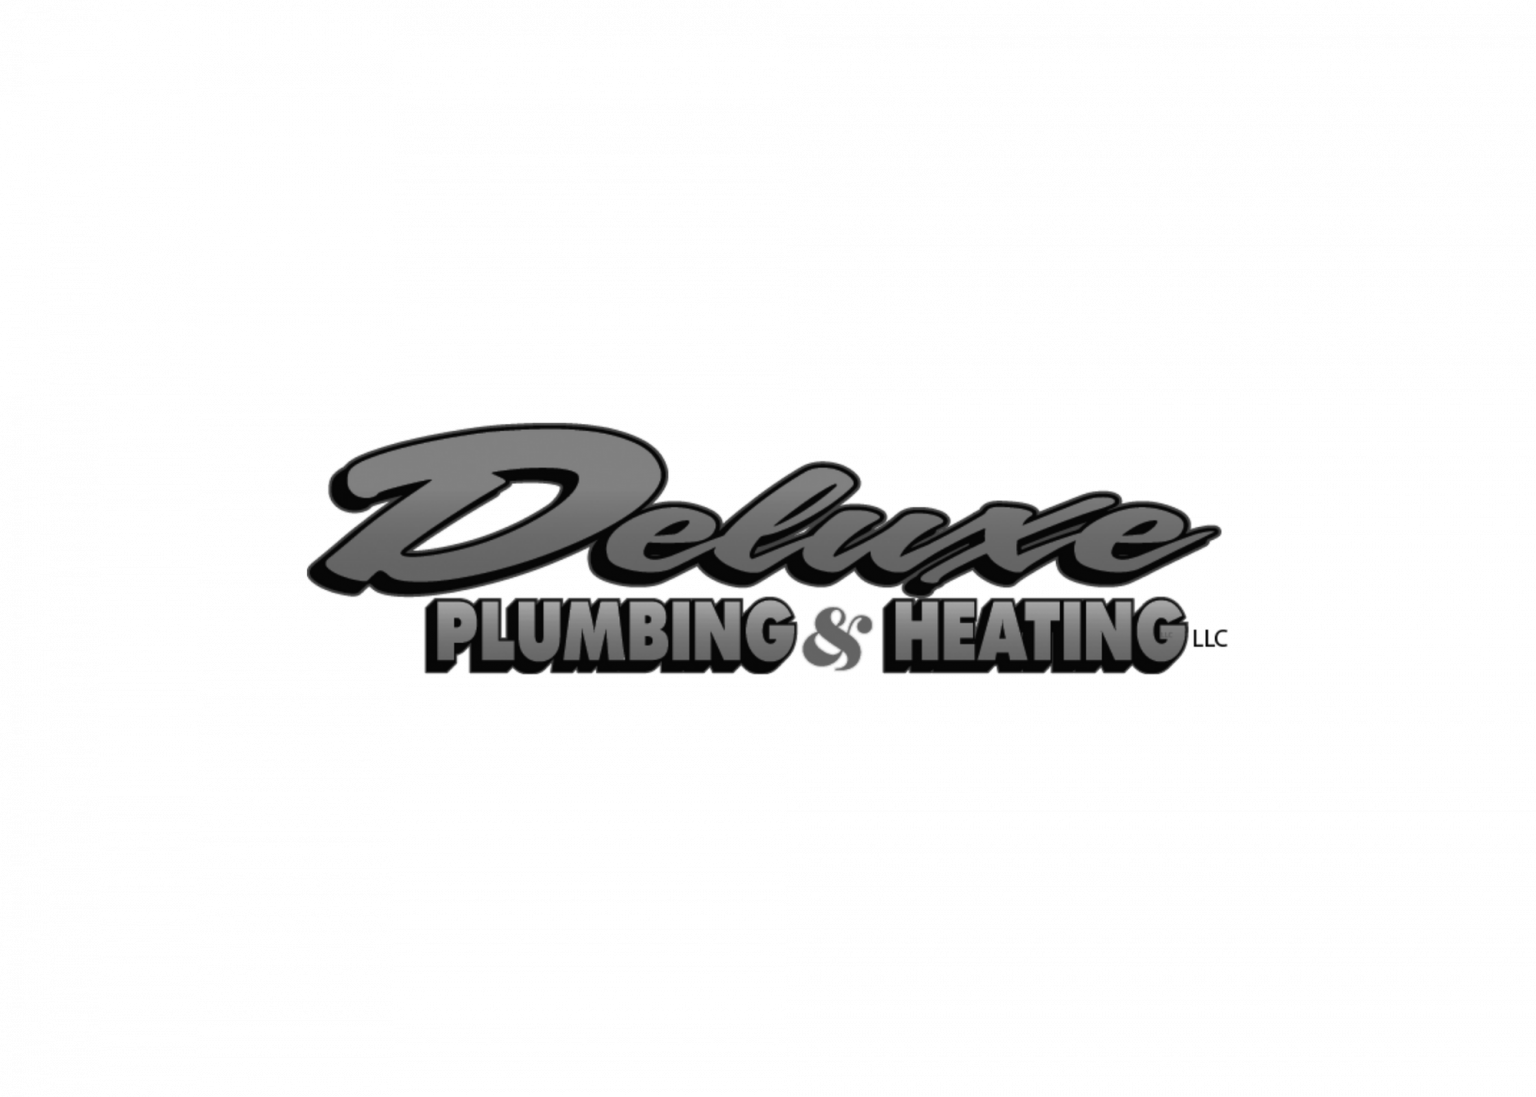 deluxe plumbing and heating